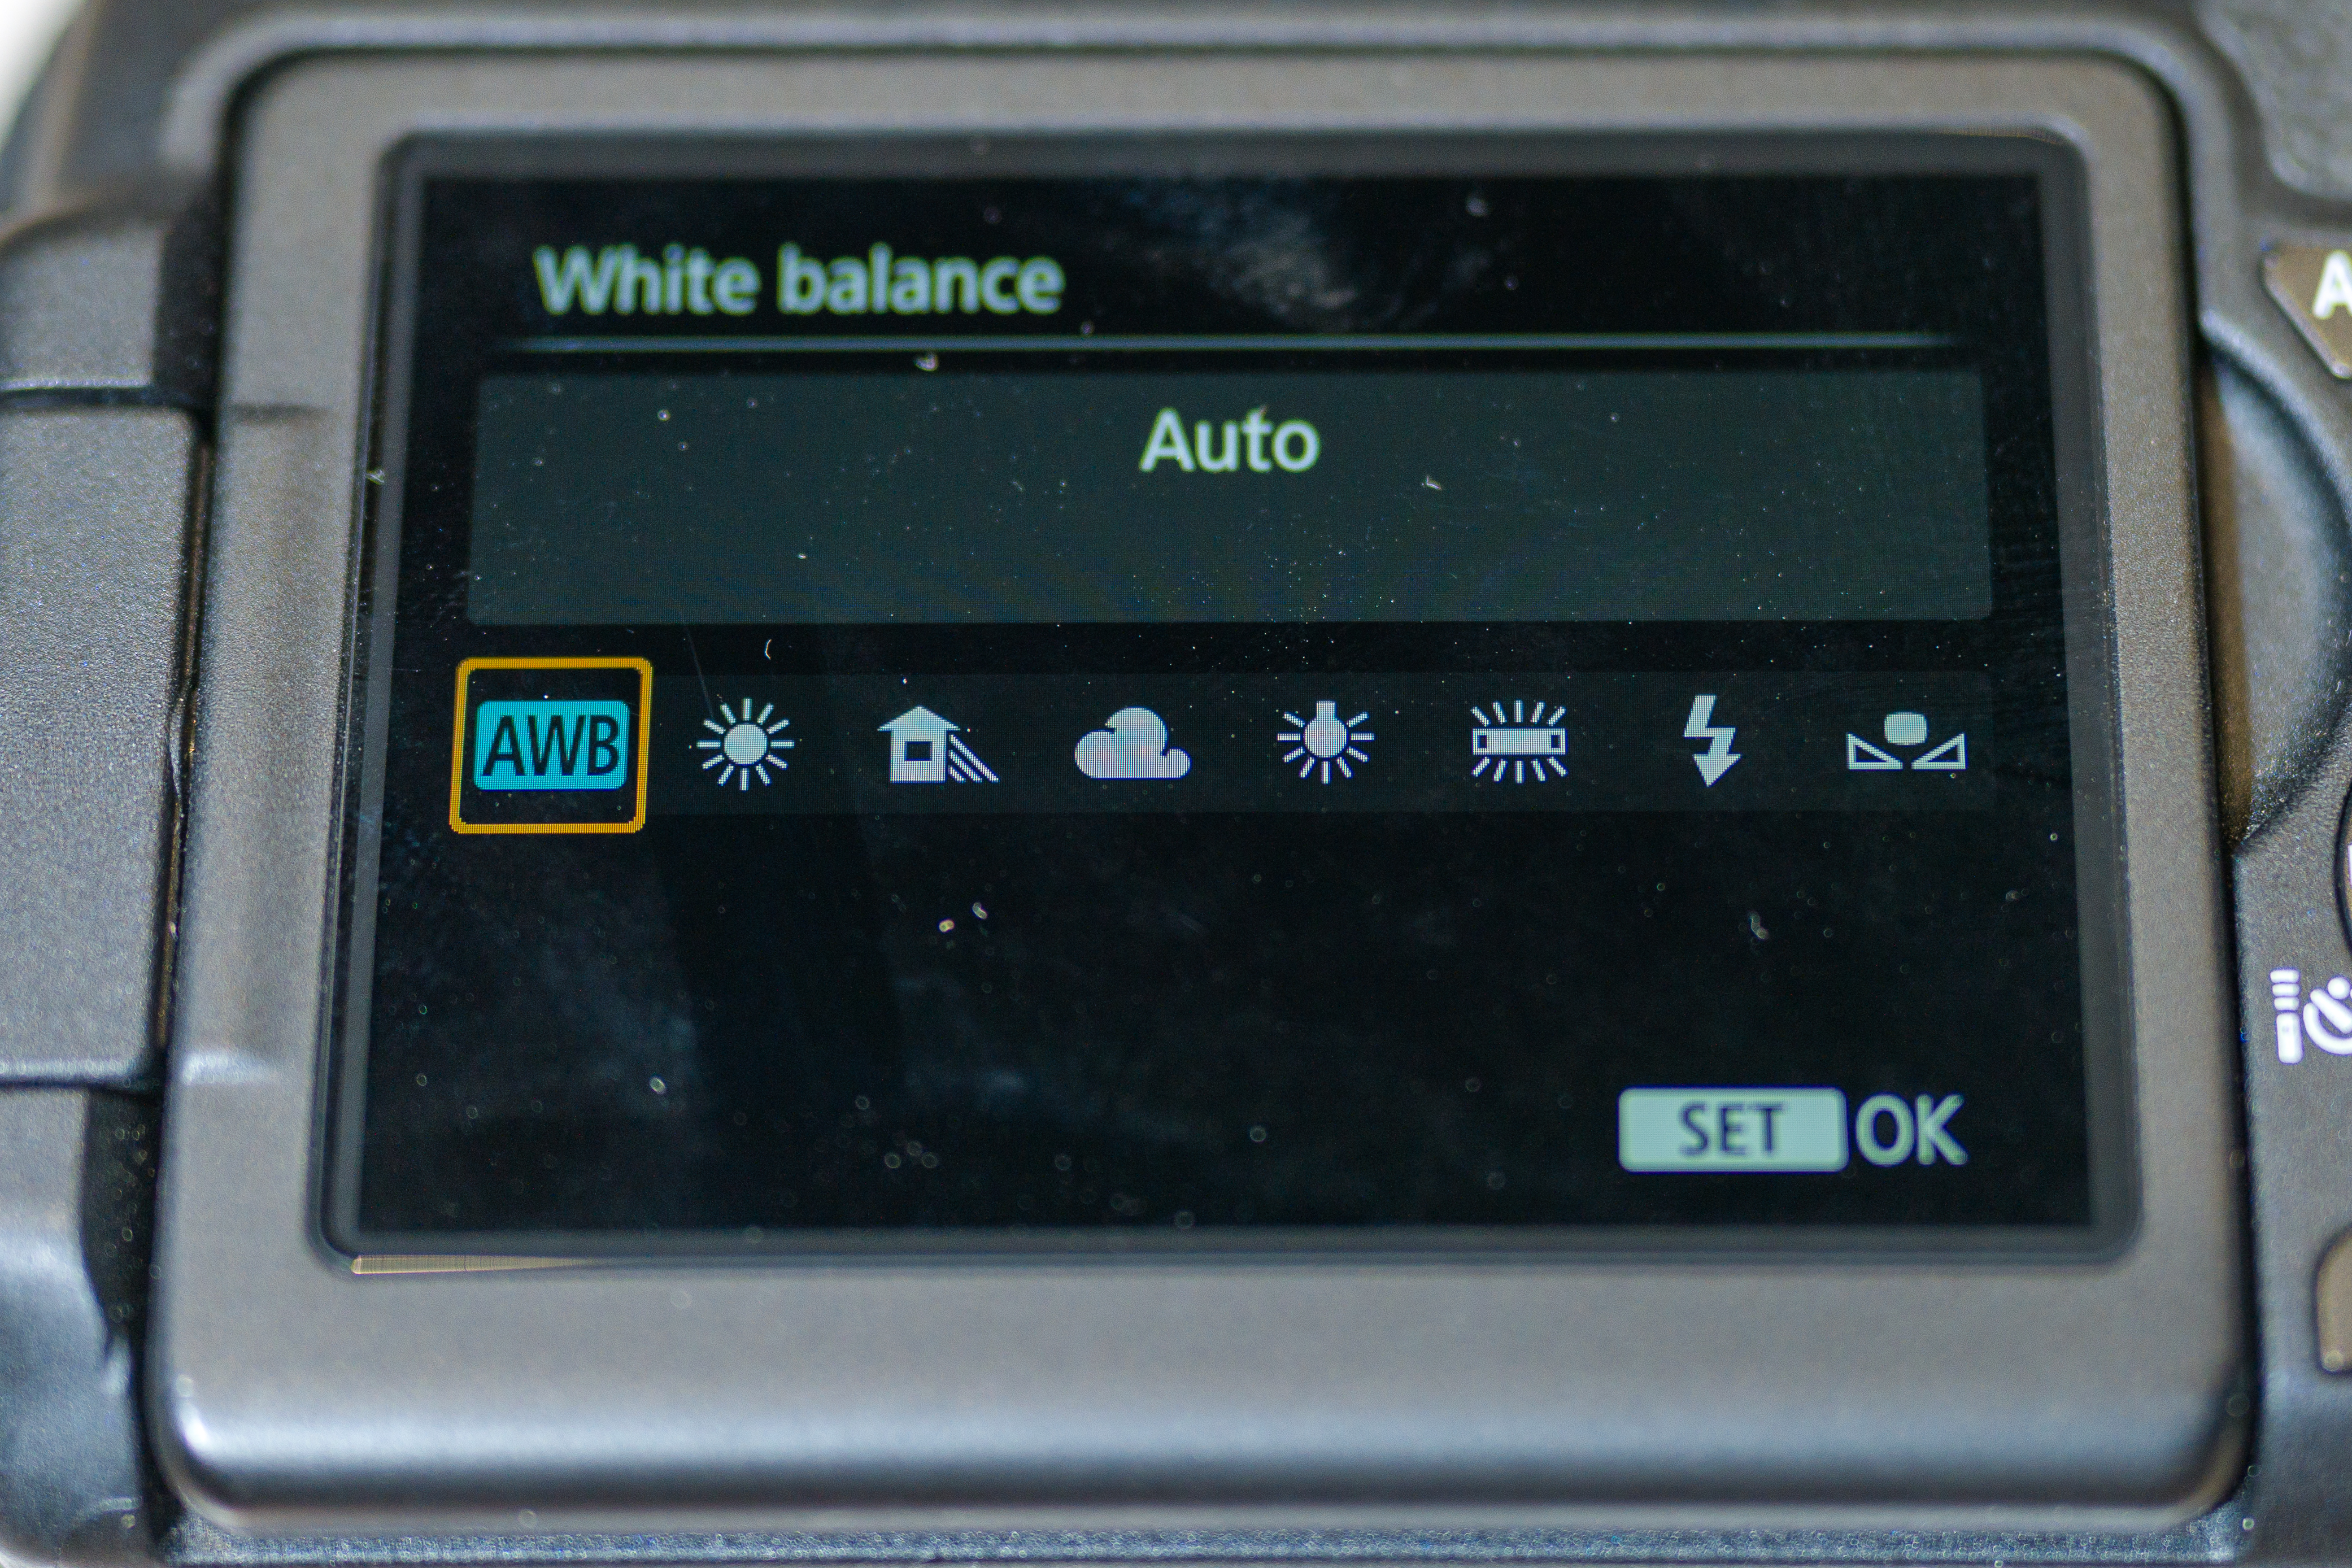 Menu on a DSLR with preset white balance icons.